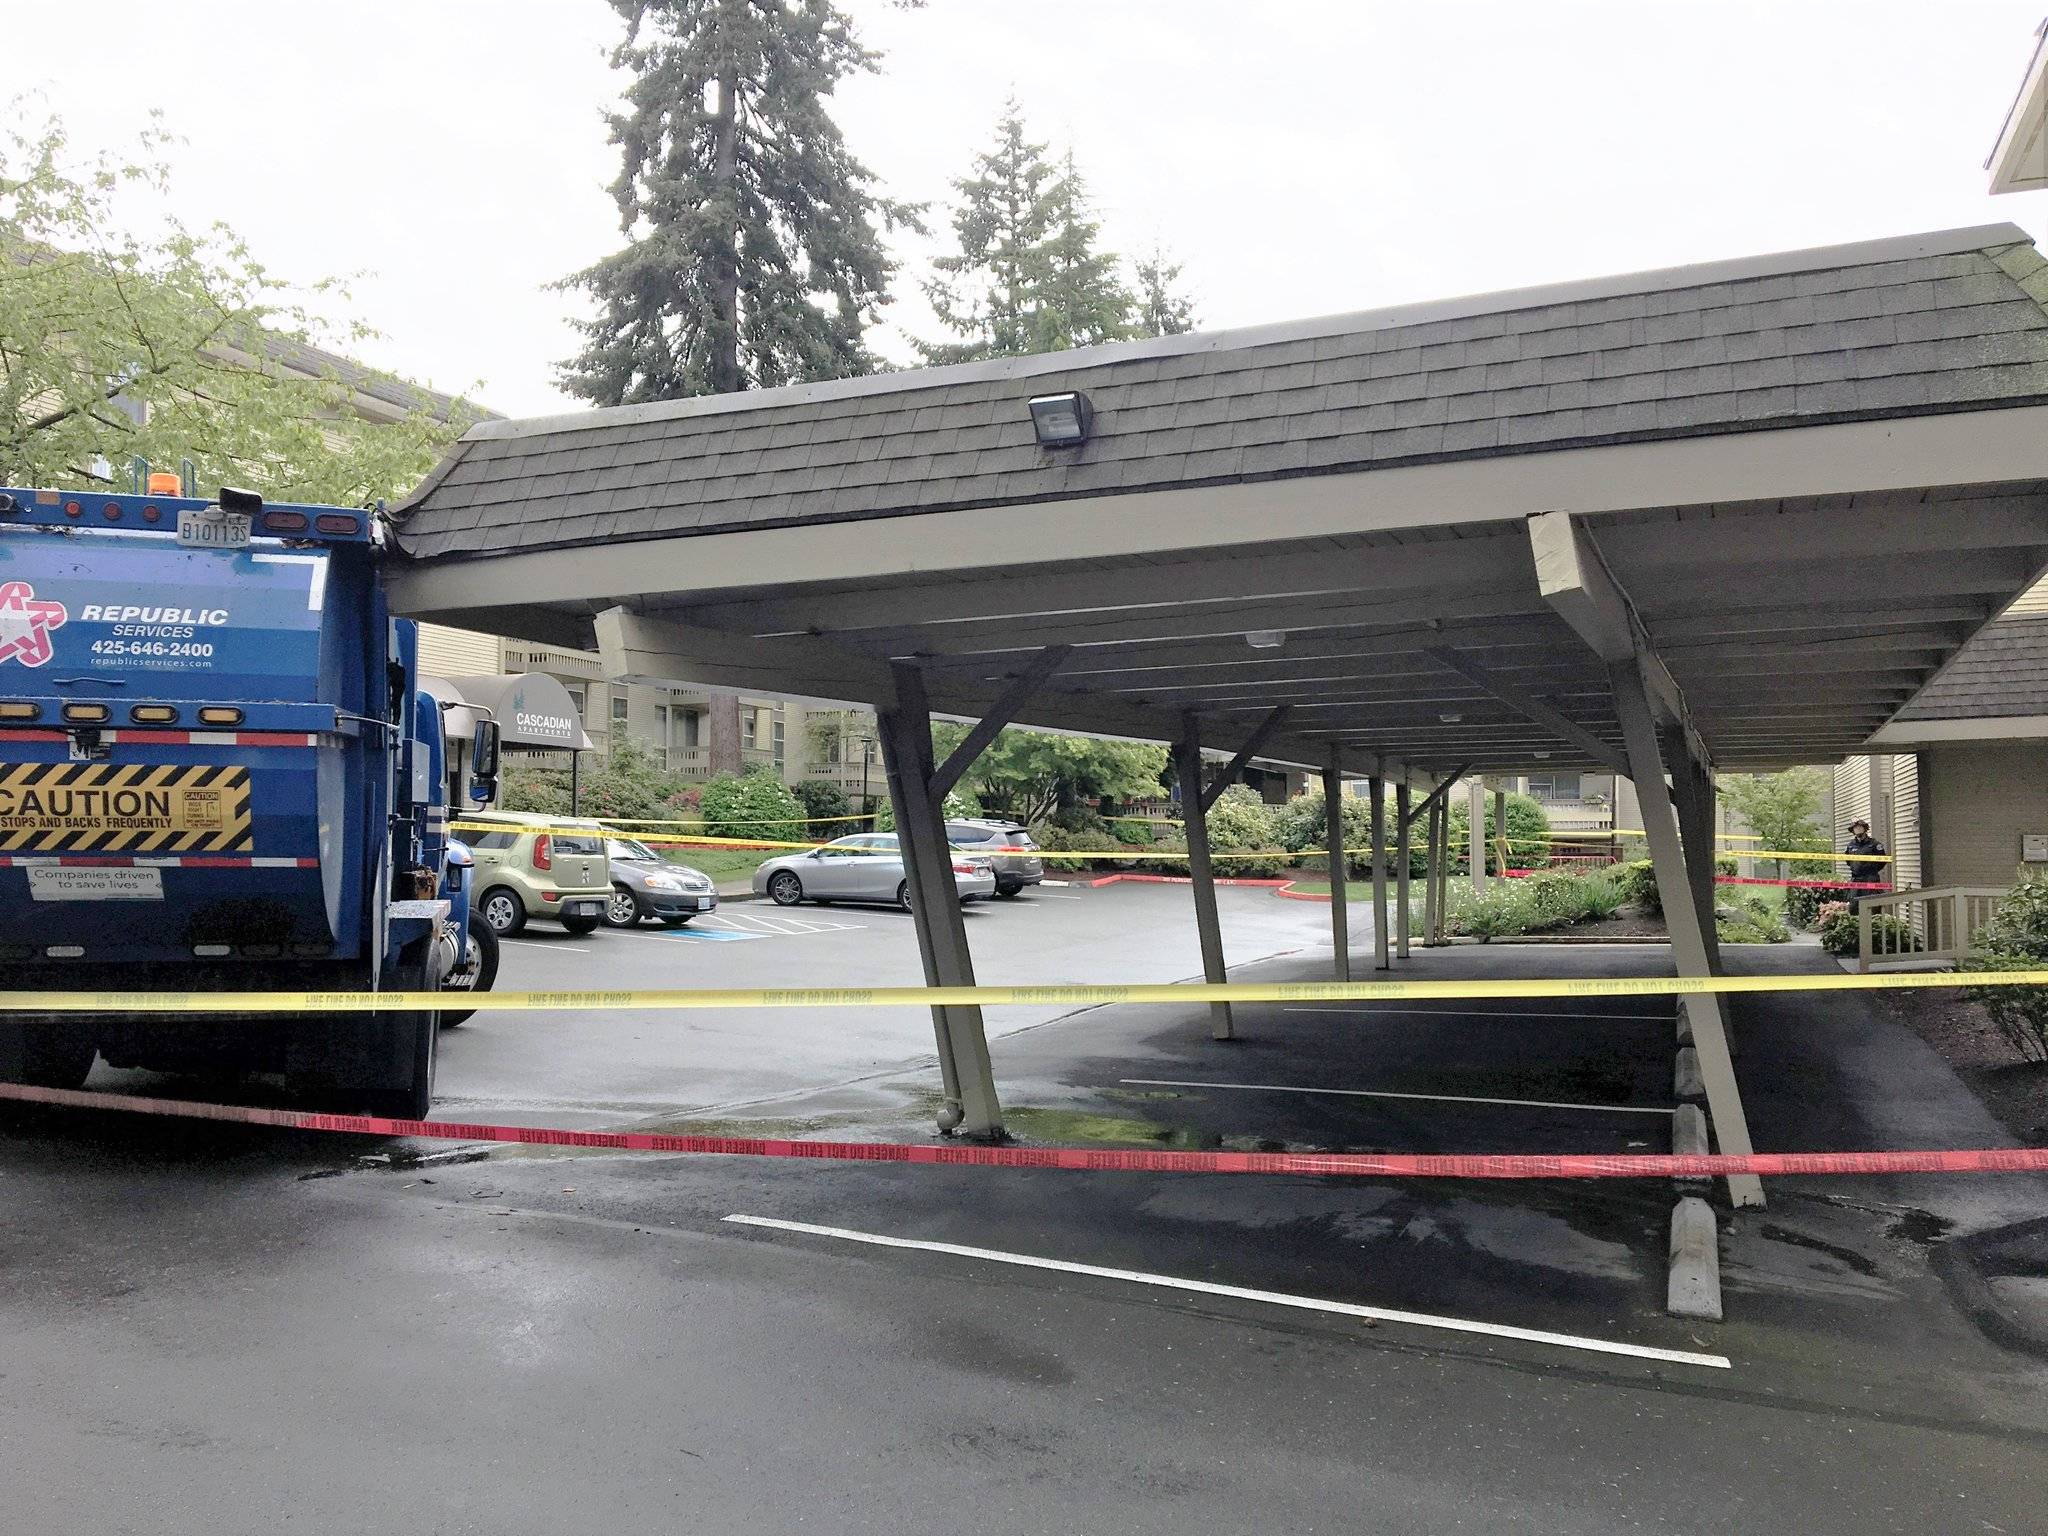 Bellevue Fire Department evacuates apartment after garbage truck damages carport